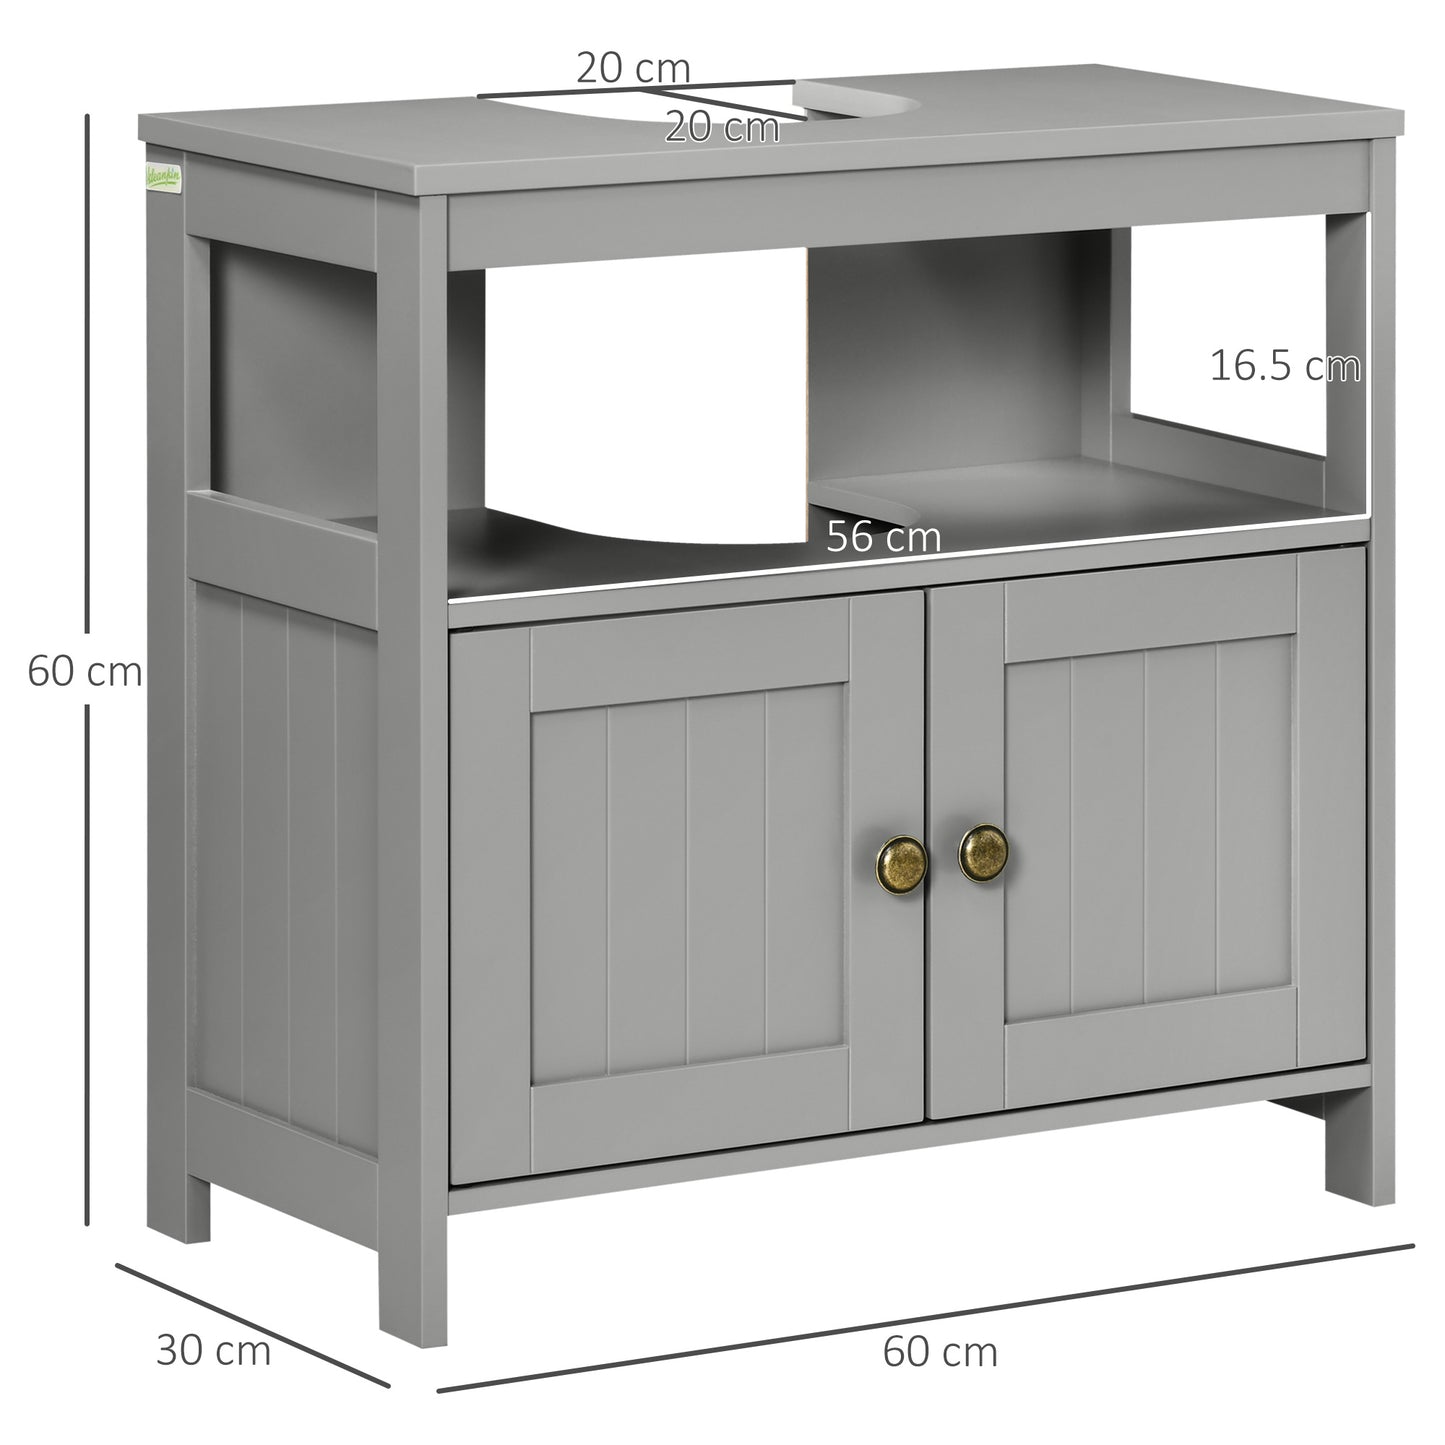 kleankin Pedestal Under Sink Cabinet with Double Doors, Modern Bathroom Vanity Storage Unit with Shelves, Light Grey